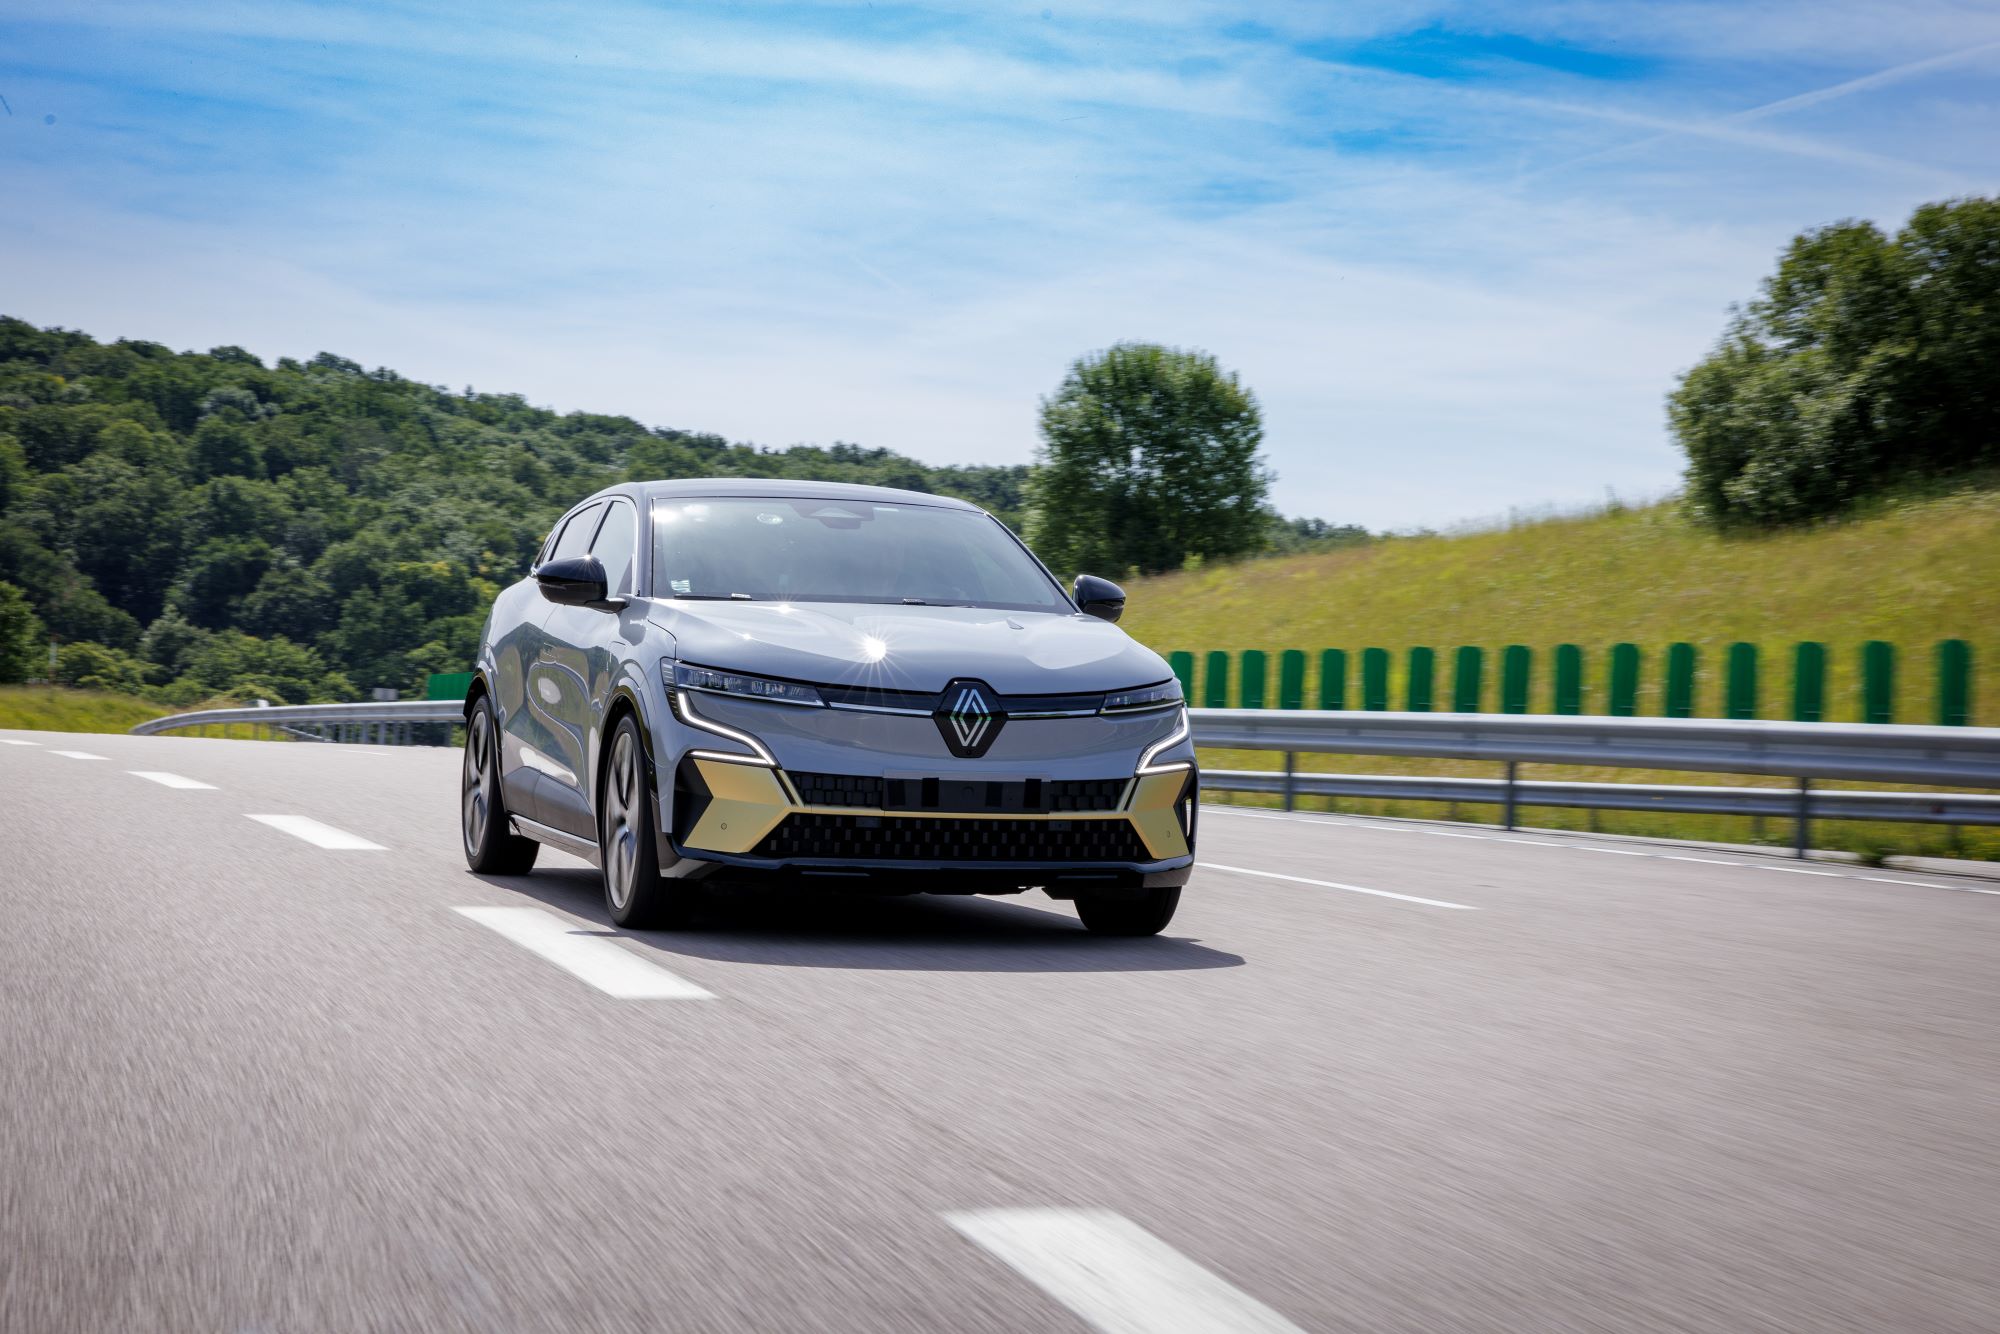 Renault-Megane E-Tech Electric-News und -Tests